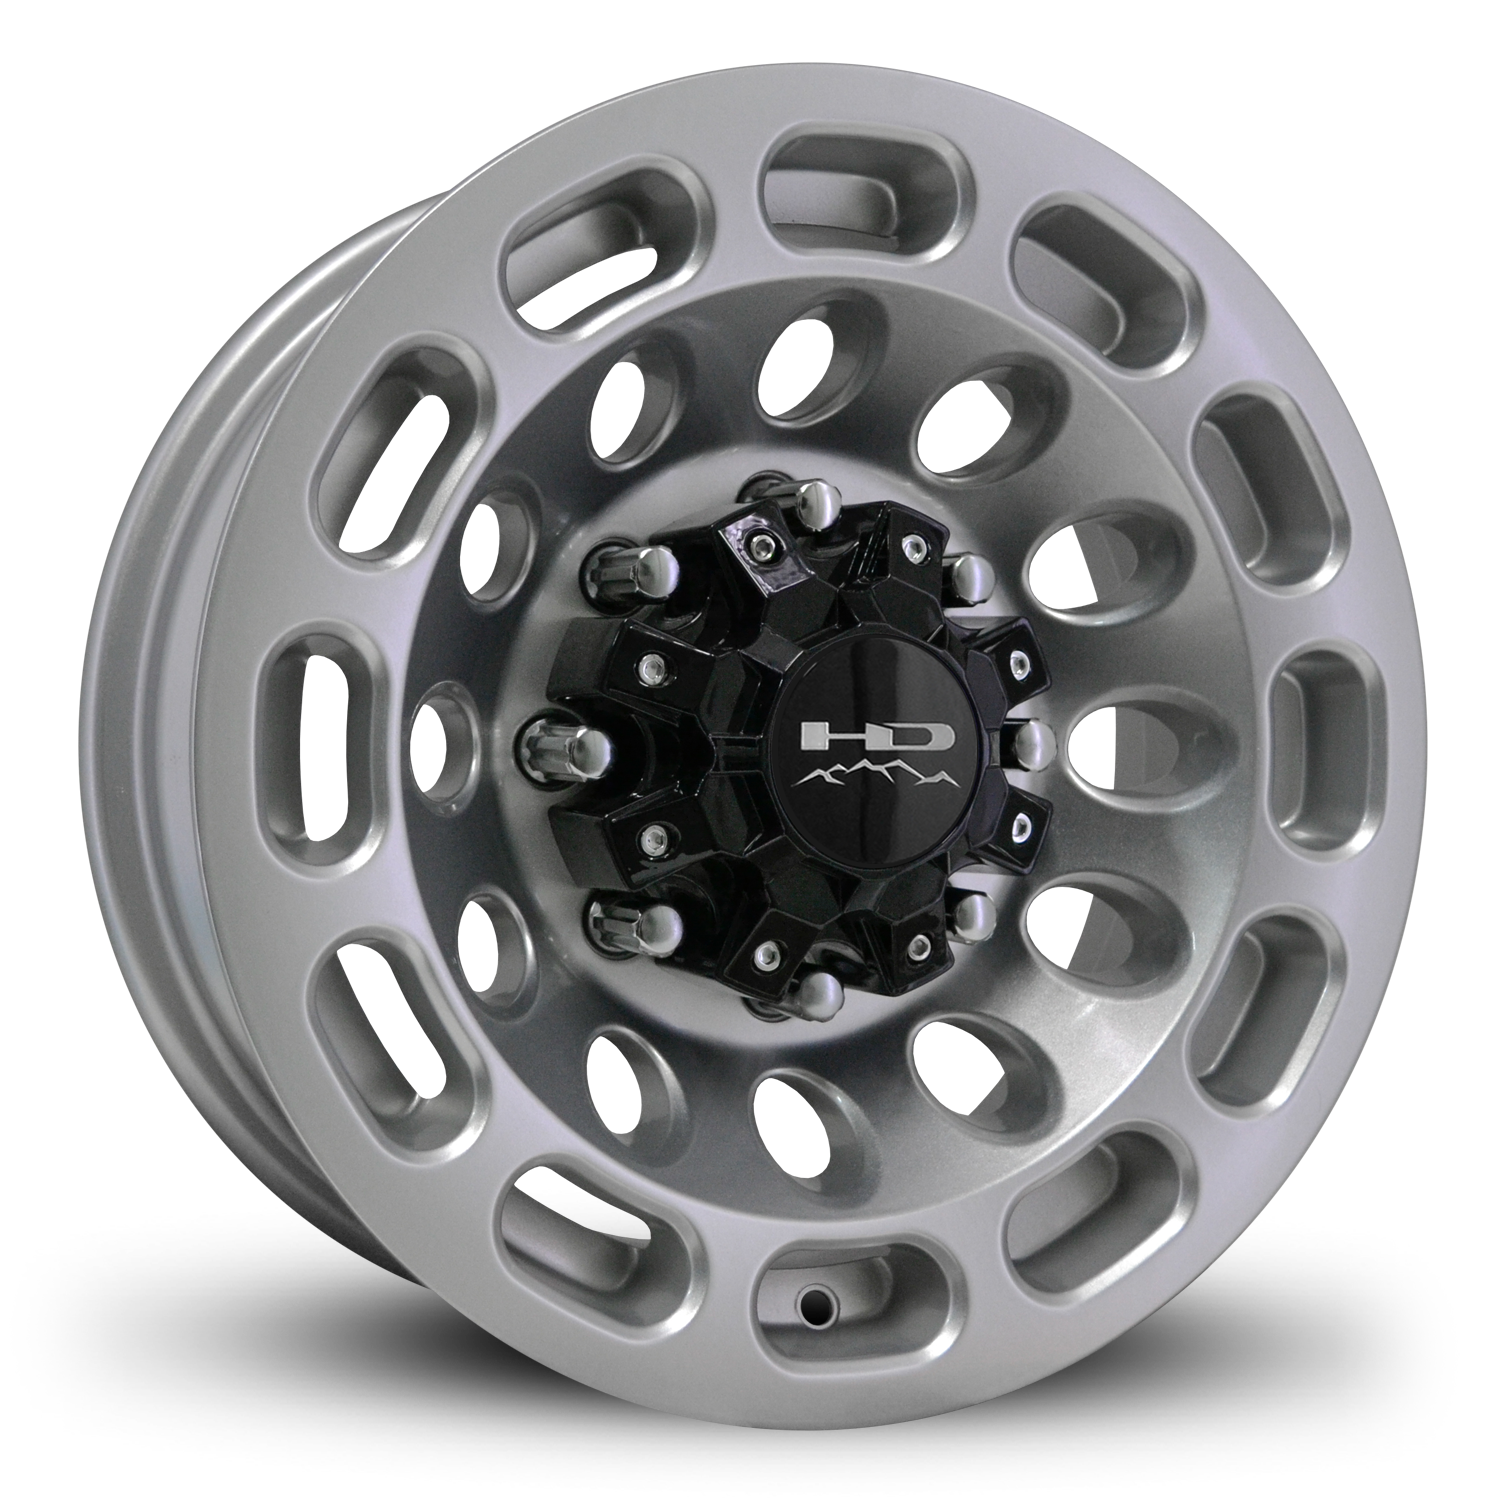 HD Off-Road Road Warrior Custom Trailer Wheels in 16x6.0 in 8 lug All Gloss Silver for Unility, Boat, Car, Construction, Horse, & RV